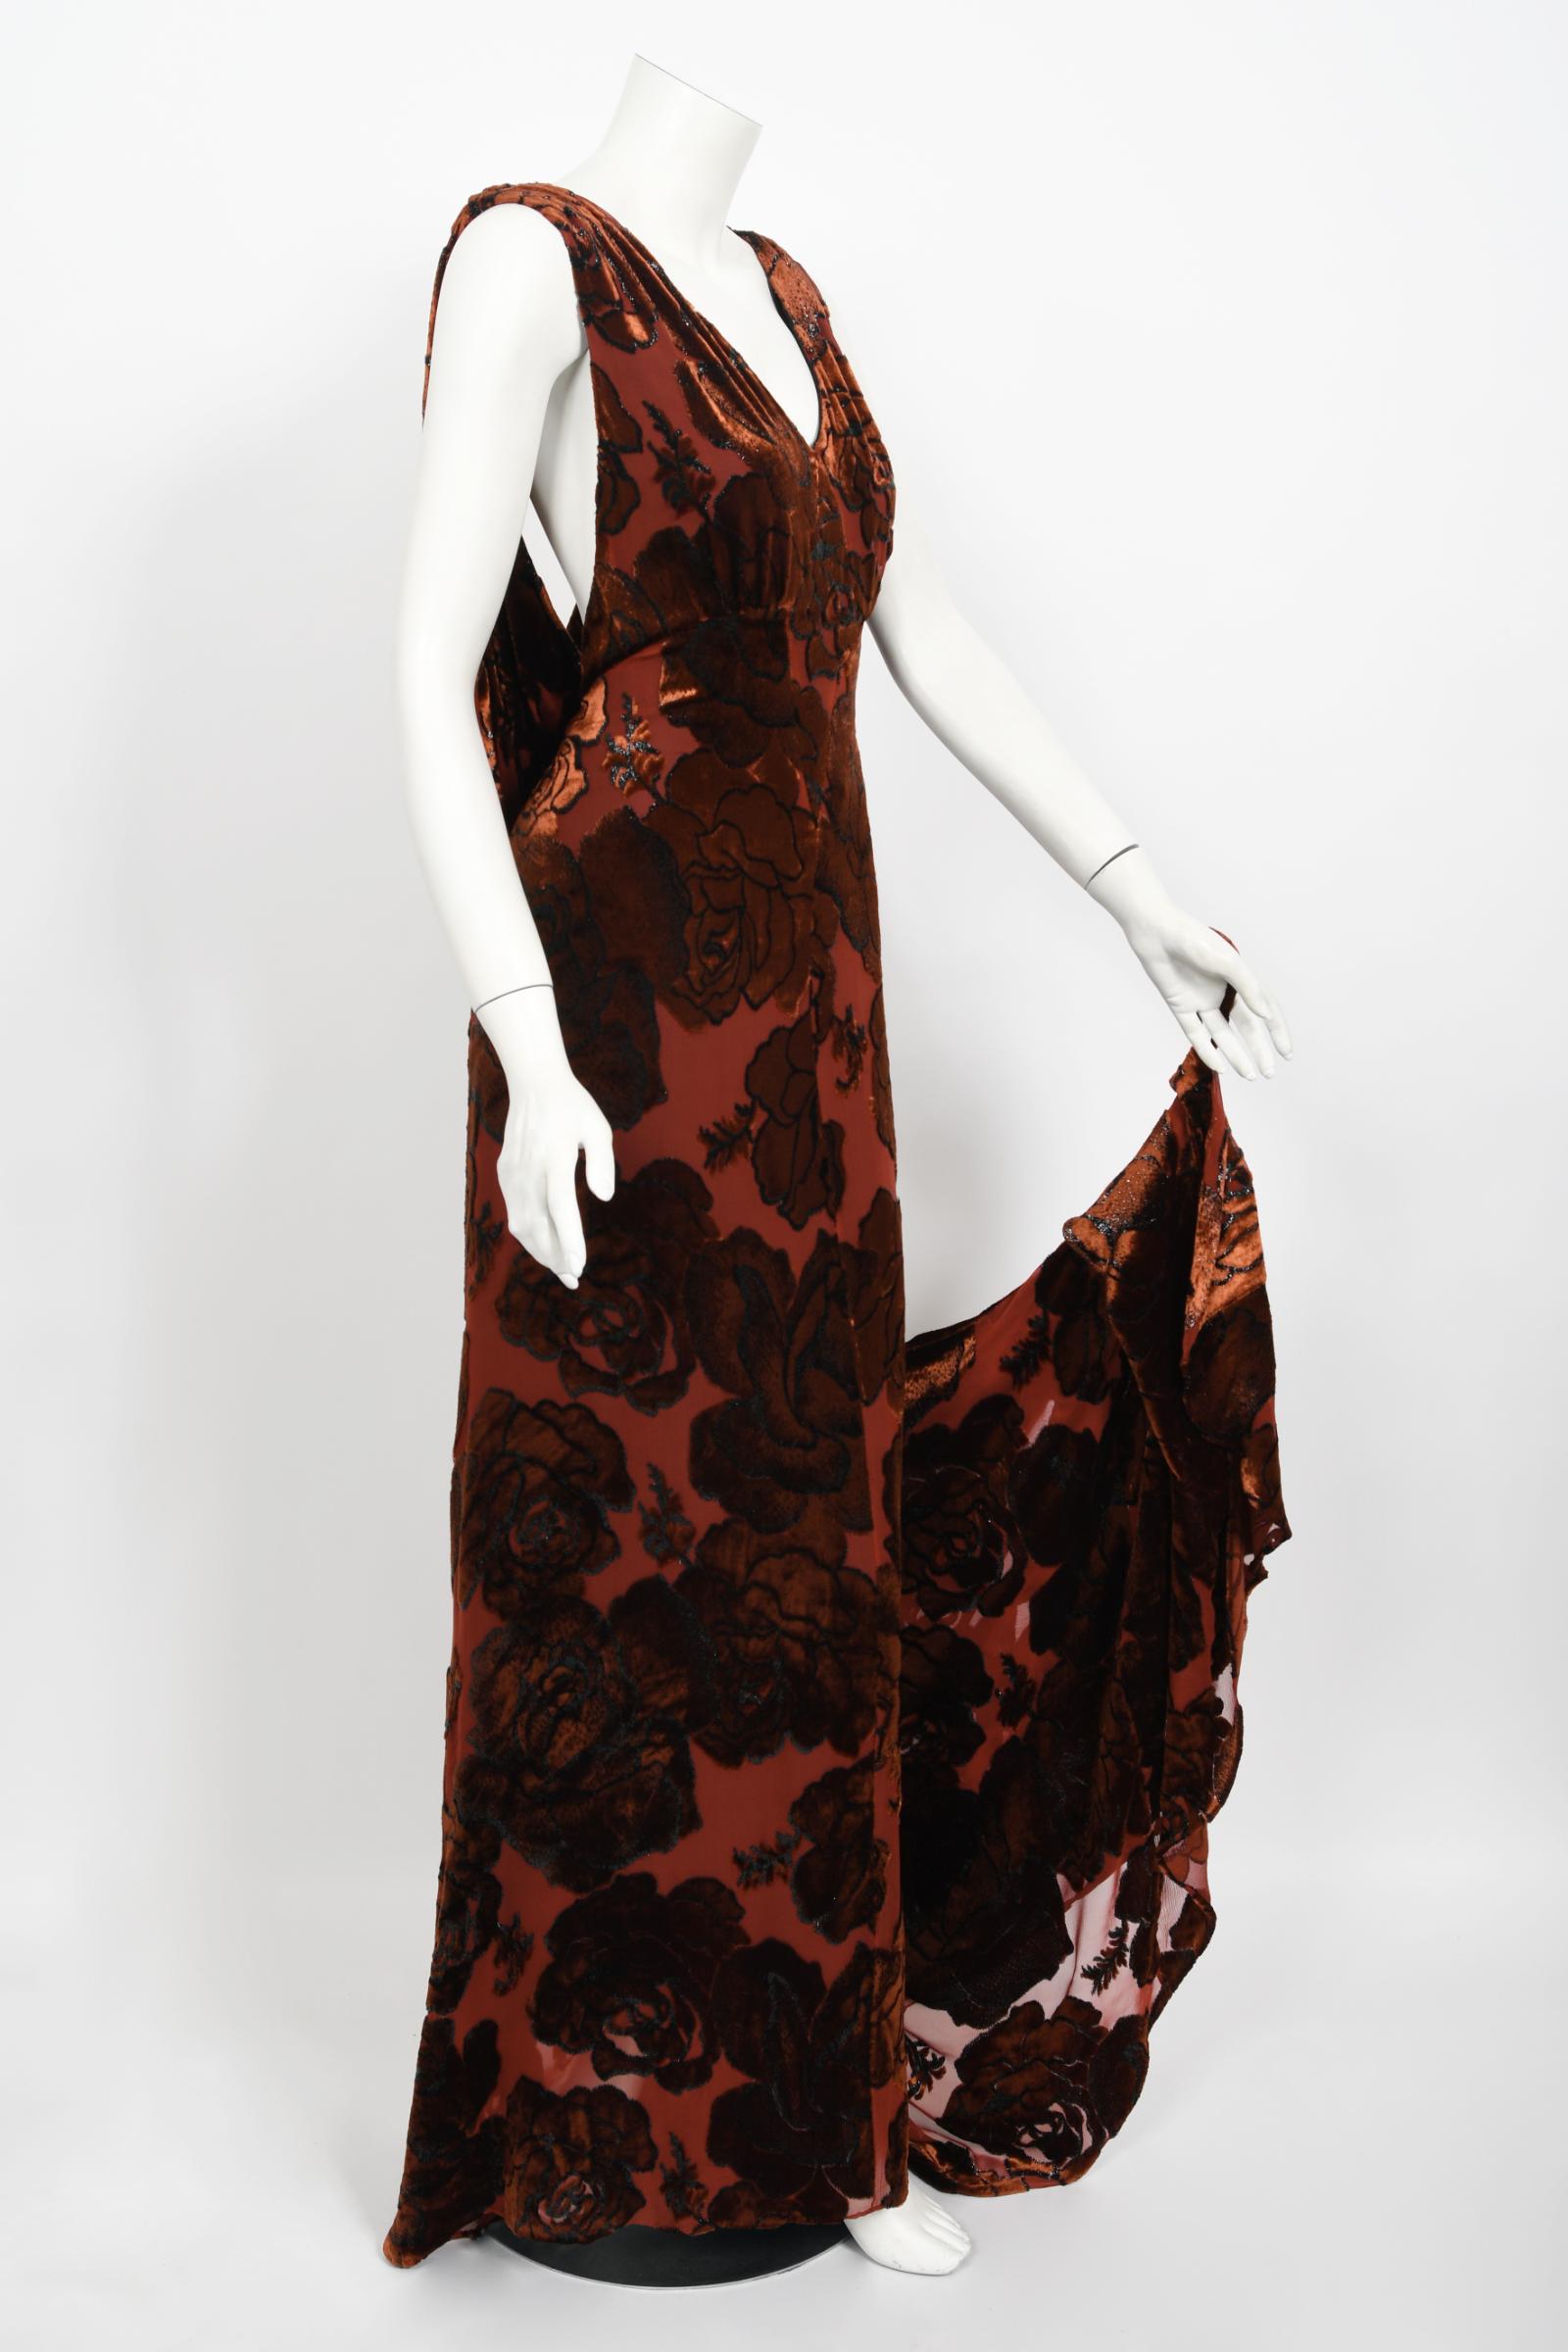 Vintage 1999 Galindo Couture Metallic Amber Devoré Velvet Bias-Cut Trained Gown For Sale 7